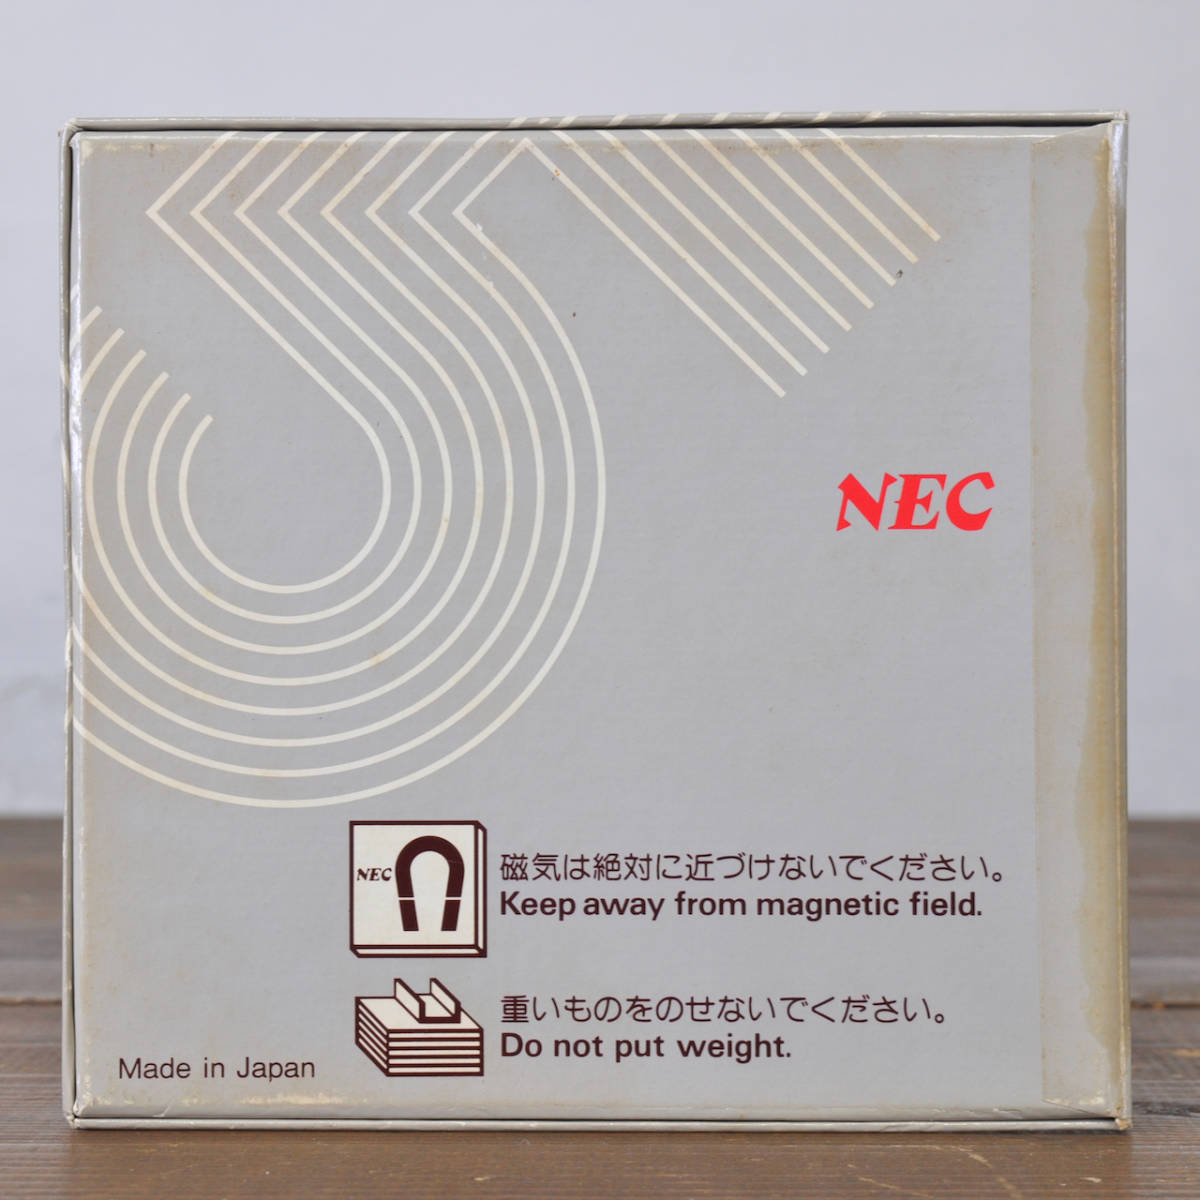 NEC「PC-8801 MK2 FR システムディスク」n88-日本語 BASIC 検 2HD 5インチ フロッピー